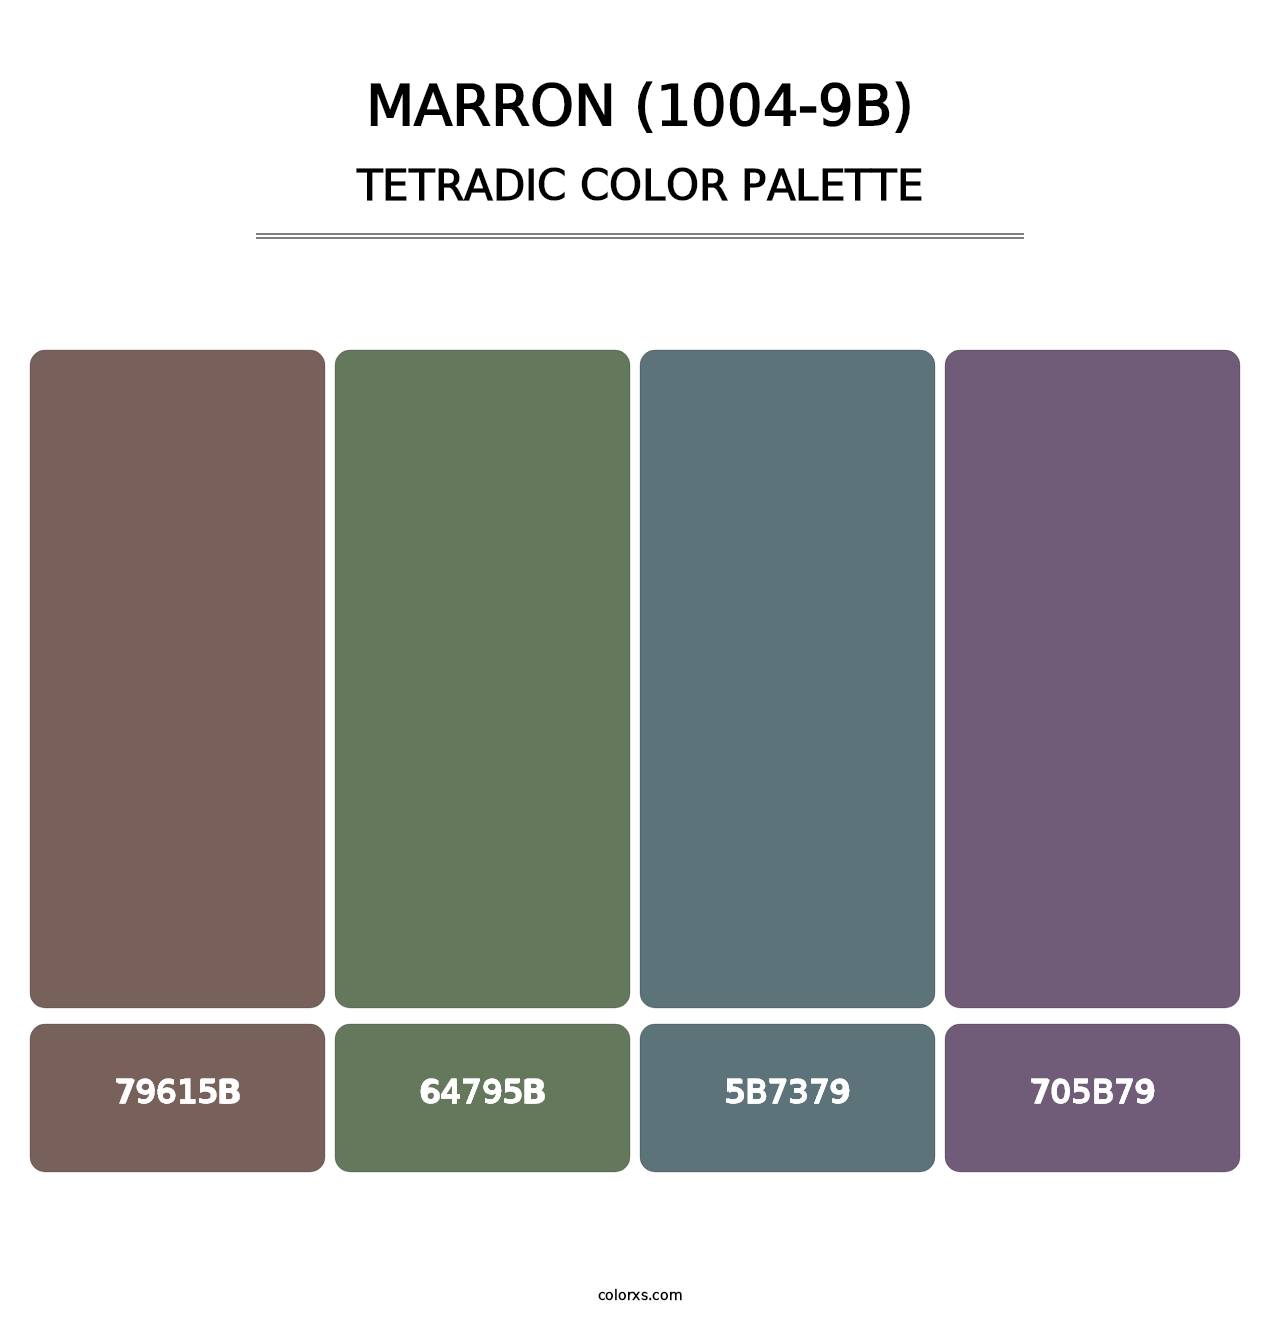 Marron (1004-9B) - Tetradic Color Palette